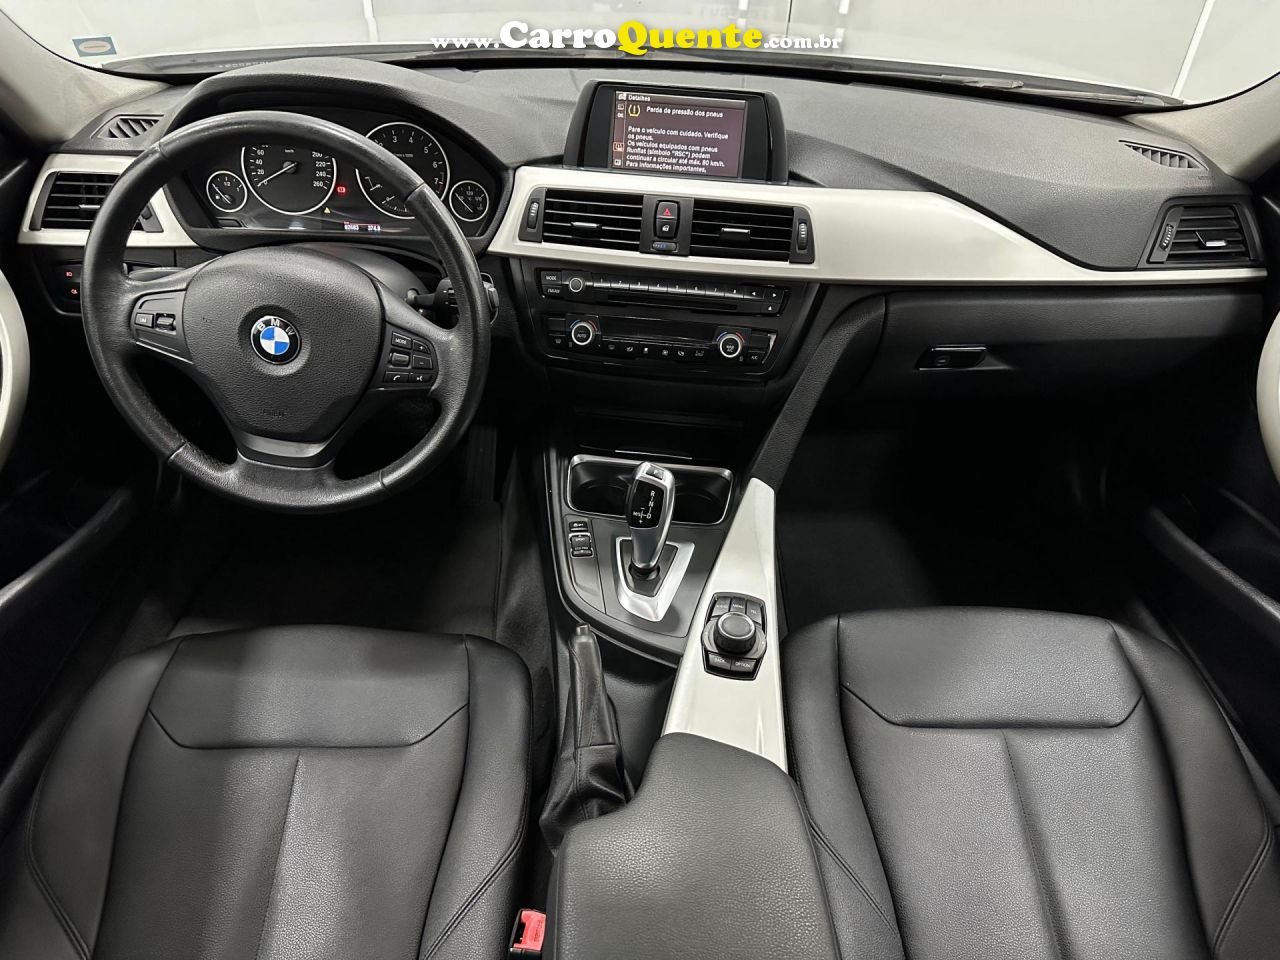 BMW   316I 1.6 TB 16V 136CV 4P   PRATA 2014 1.6 GASOLINA - Loja